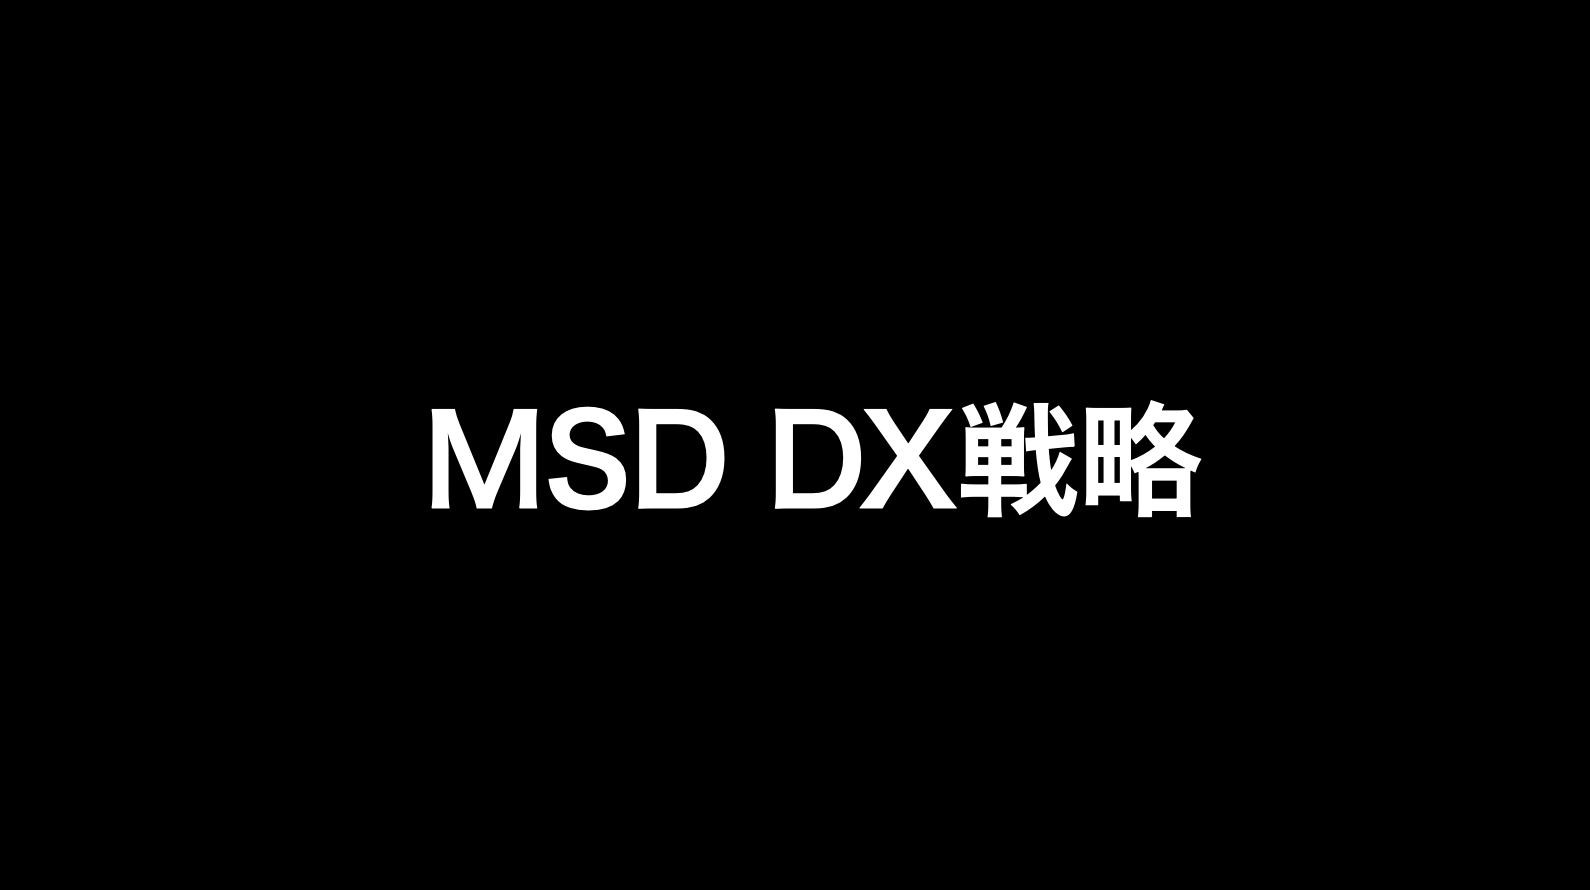 MSDのDX戦略を解説